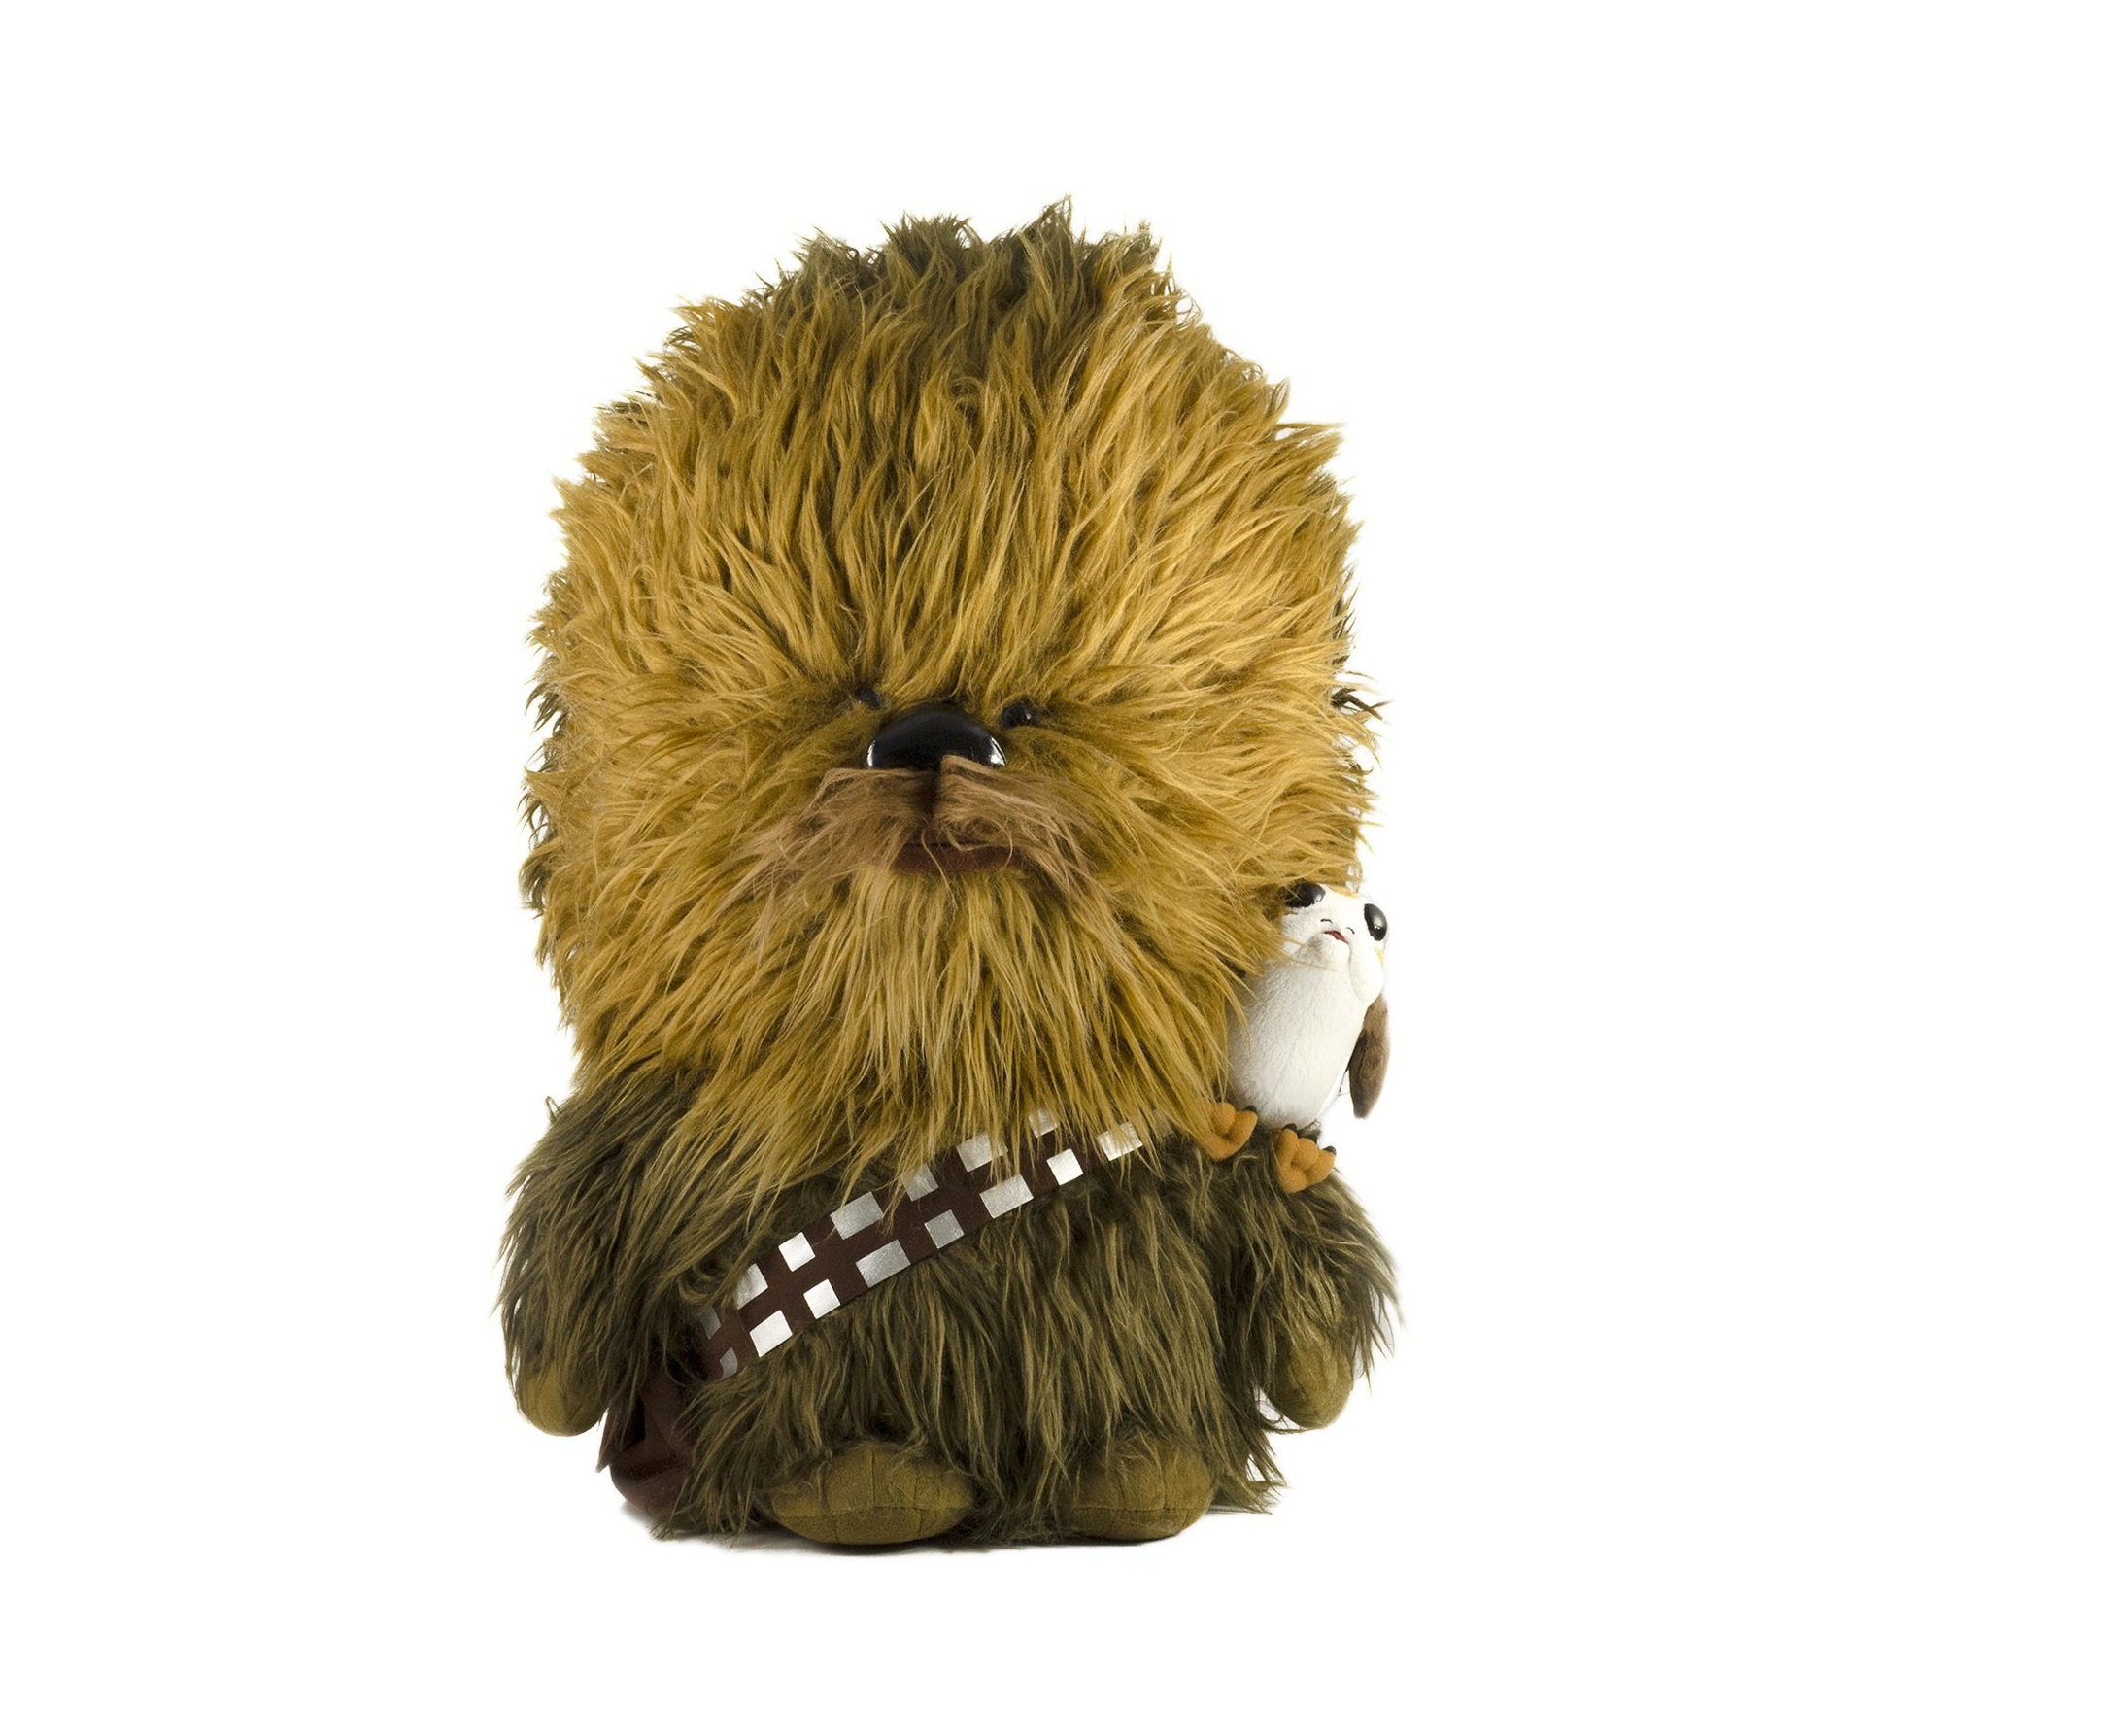 Star Wars: The Last Jedi Talking Chewbacca & Porg Plush Toy